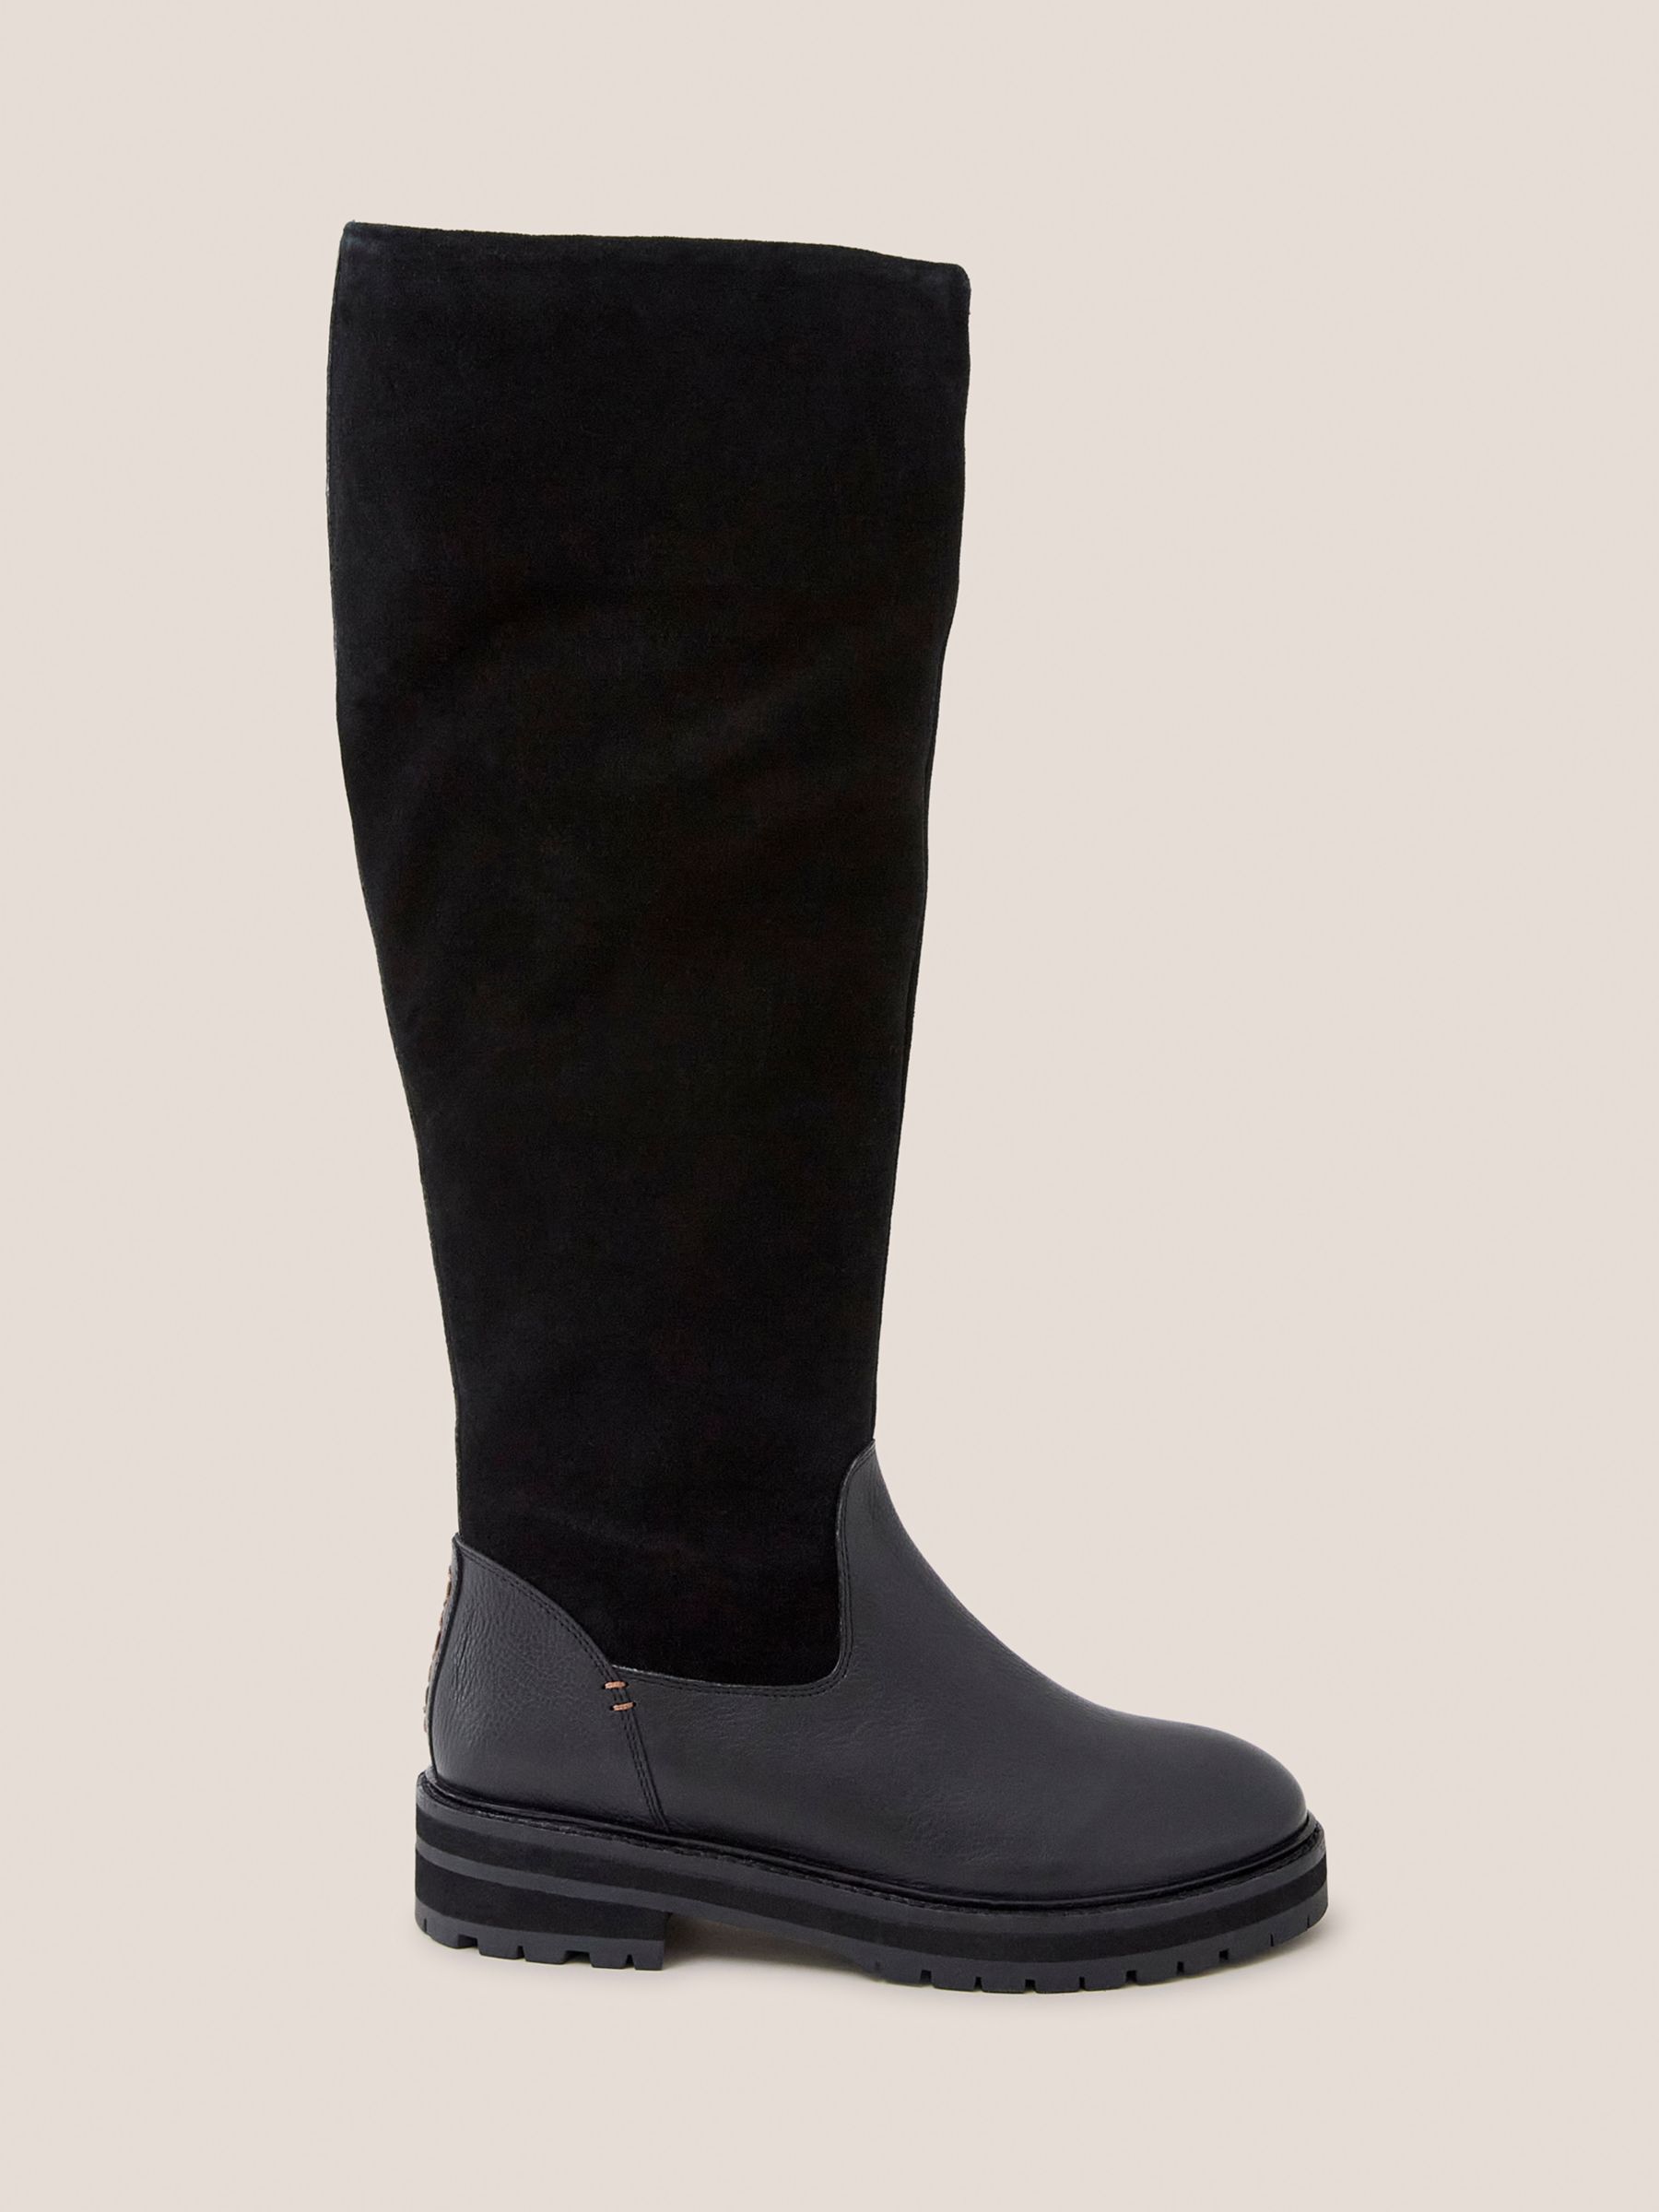 Women's Grey Coat, Black Leggings, Black Suede Knee High Boots, Multi  colored Print Scarf